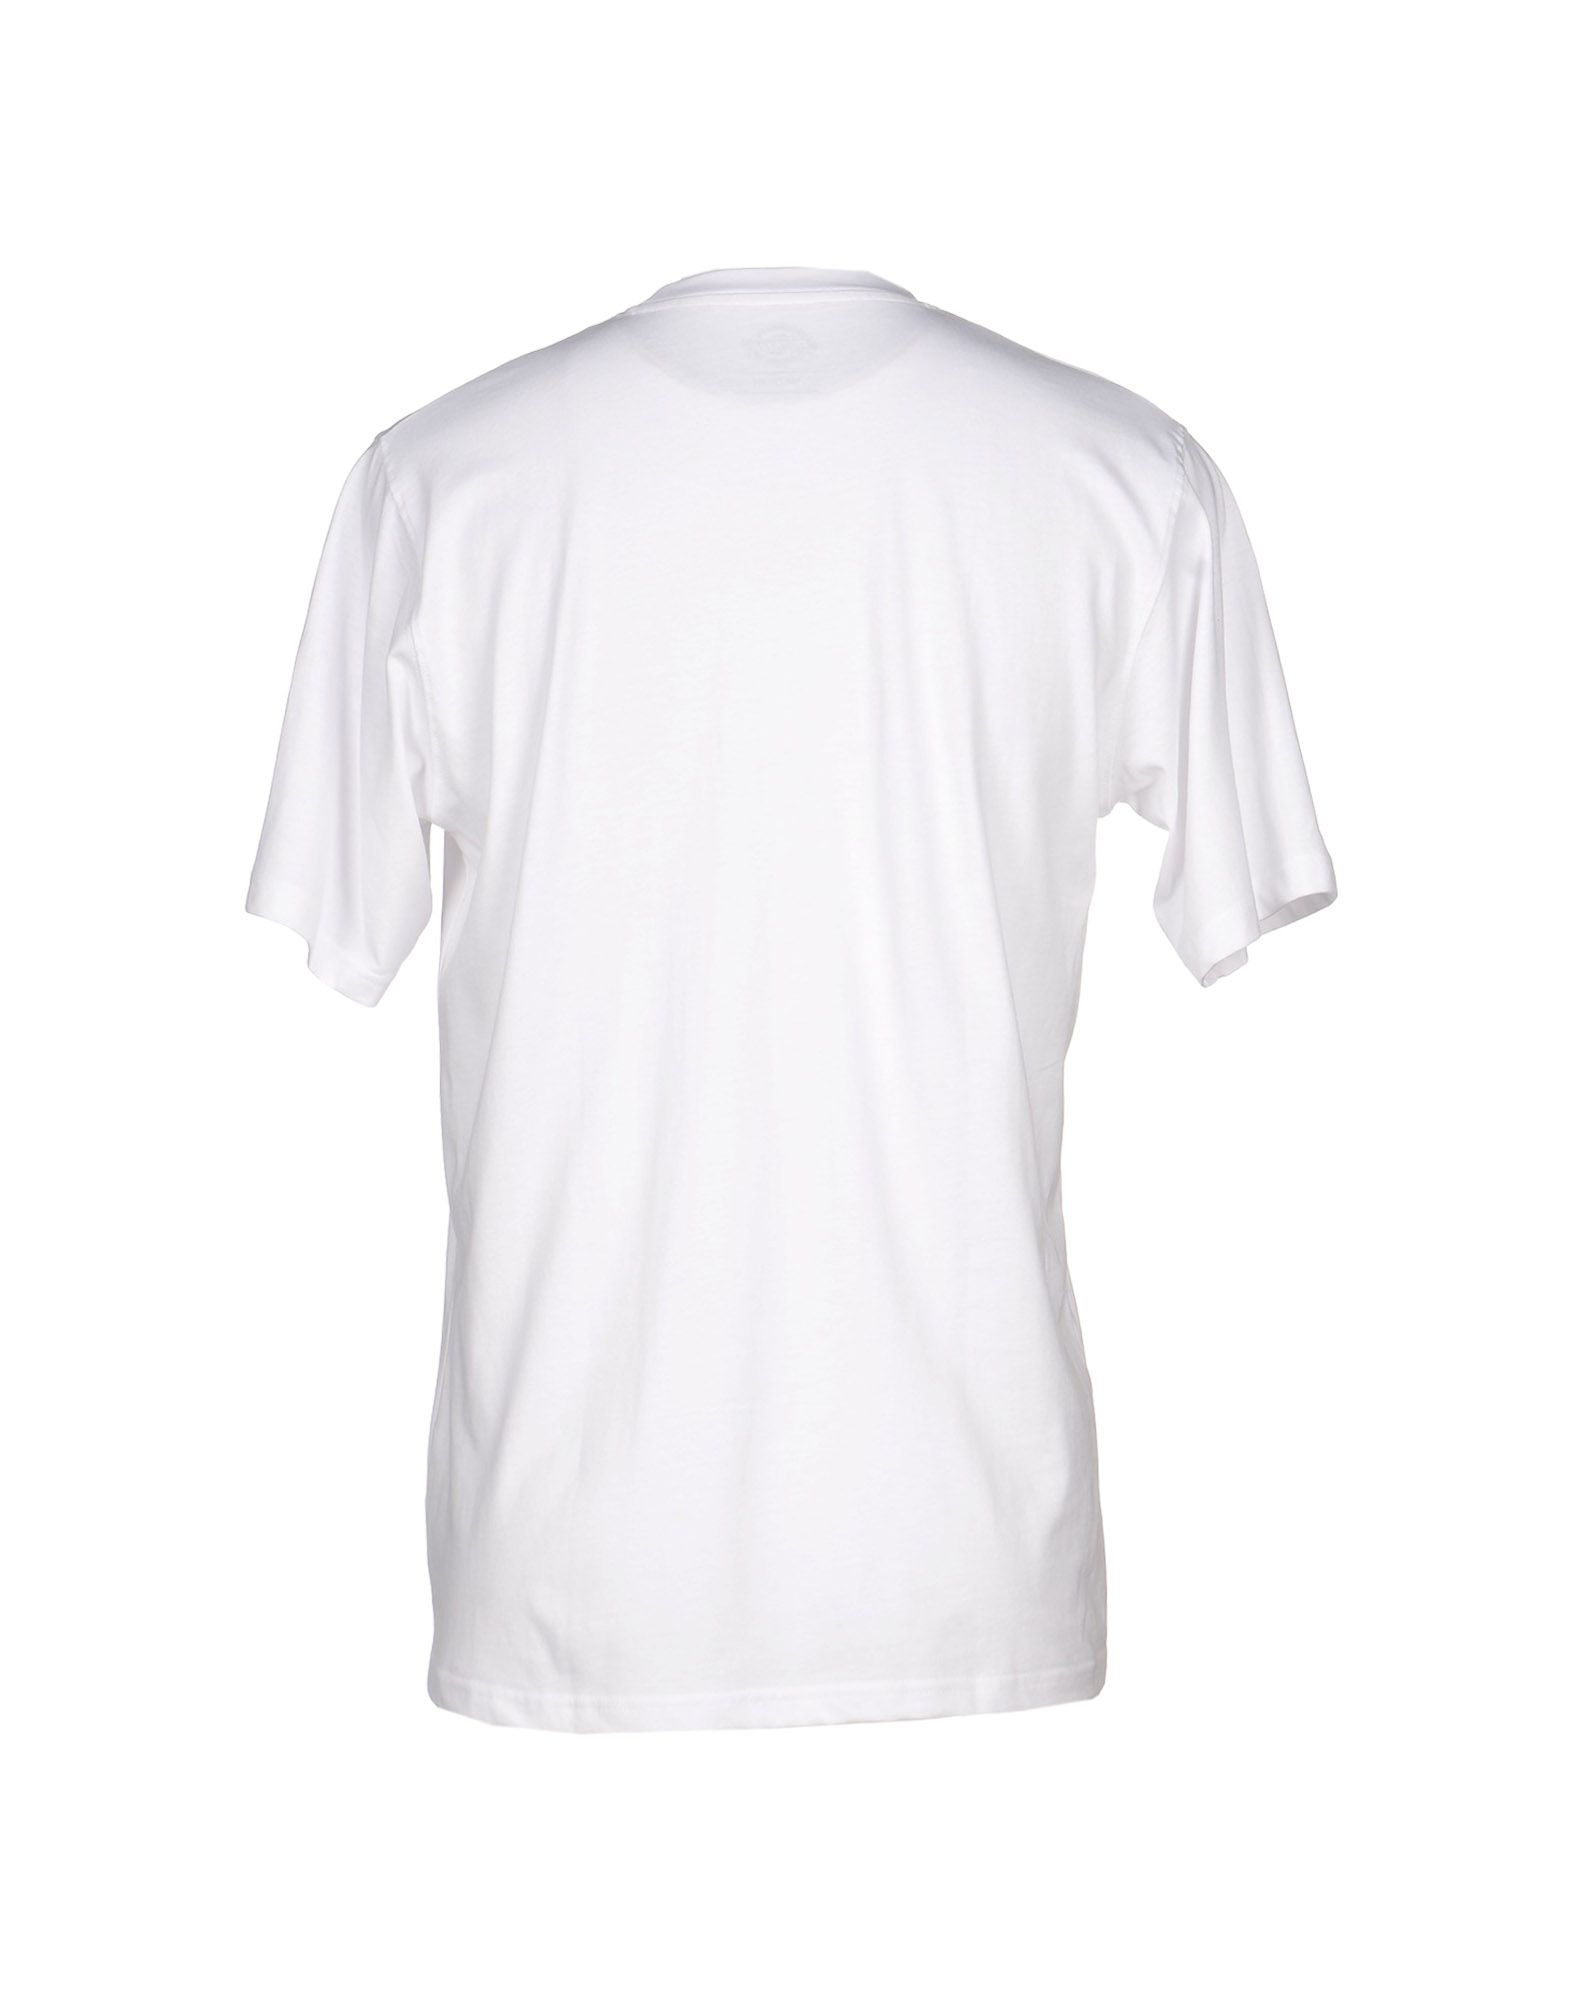 Dickies T-shirt in White for Men - Lyst